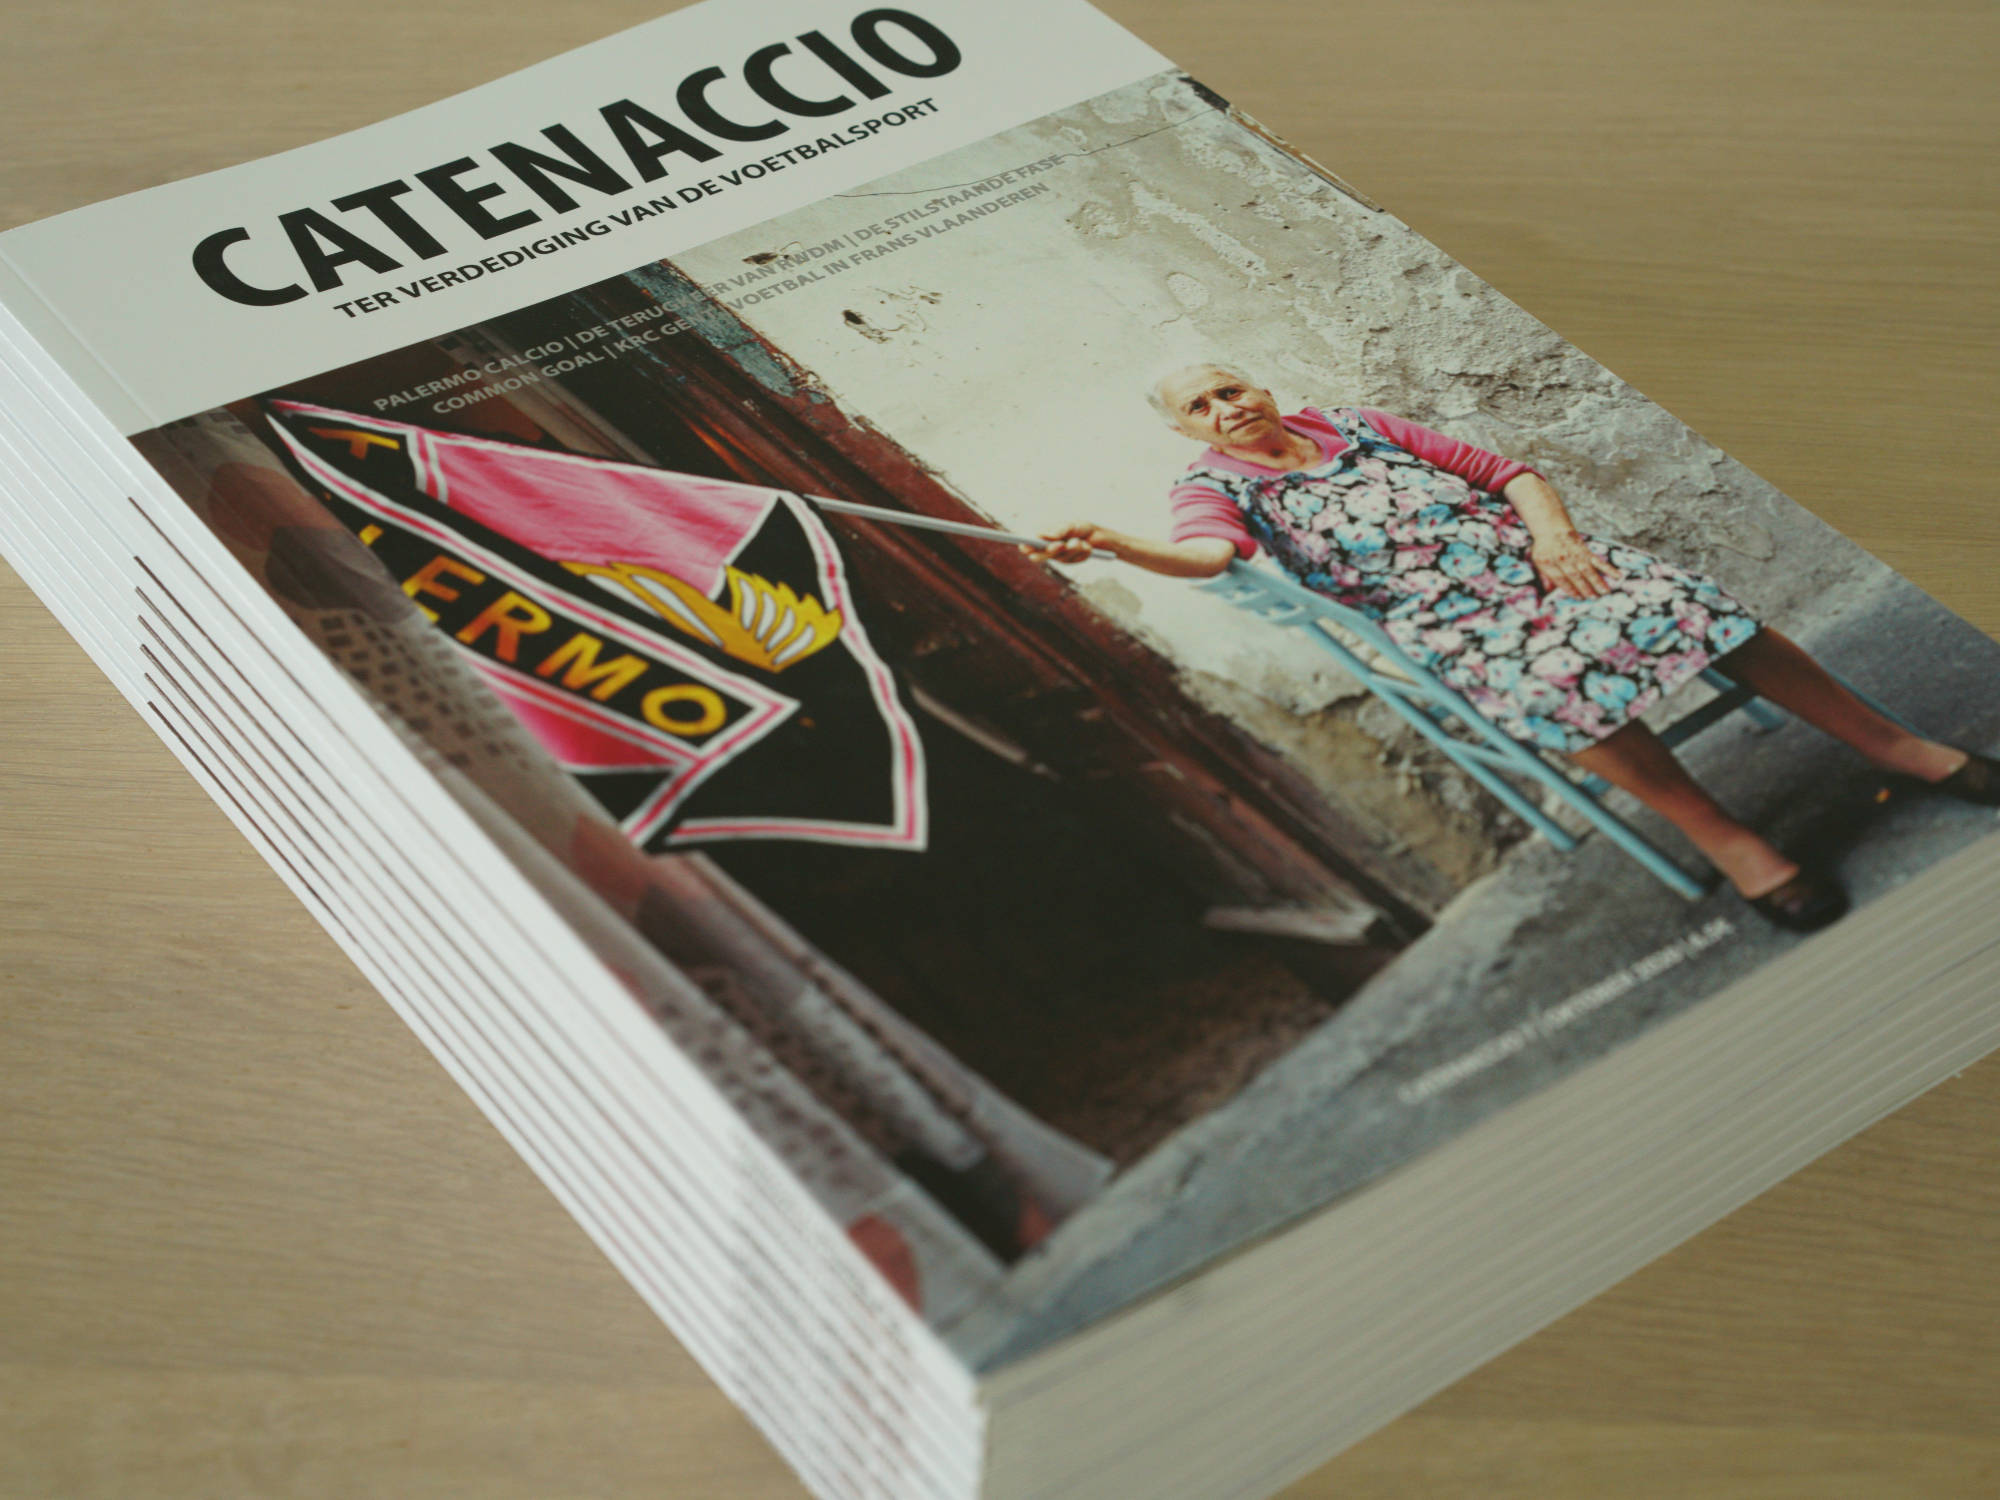 Catenaccio Magazine #7